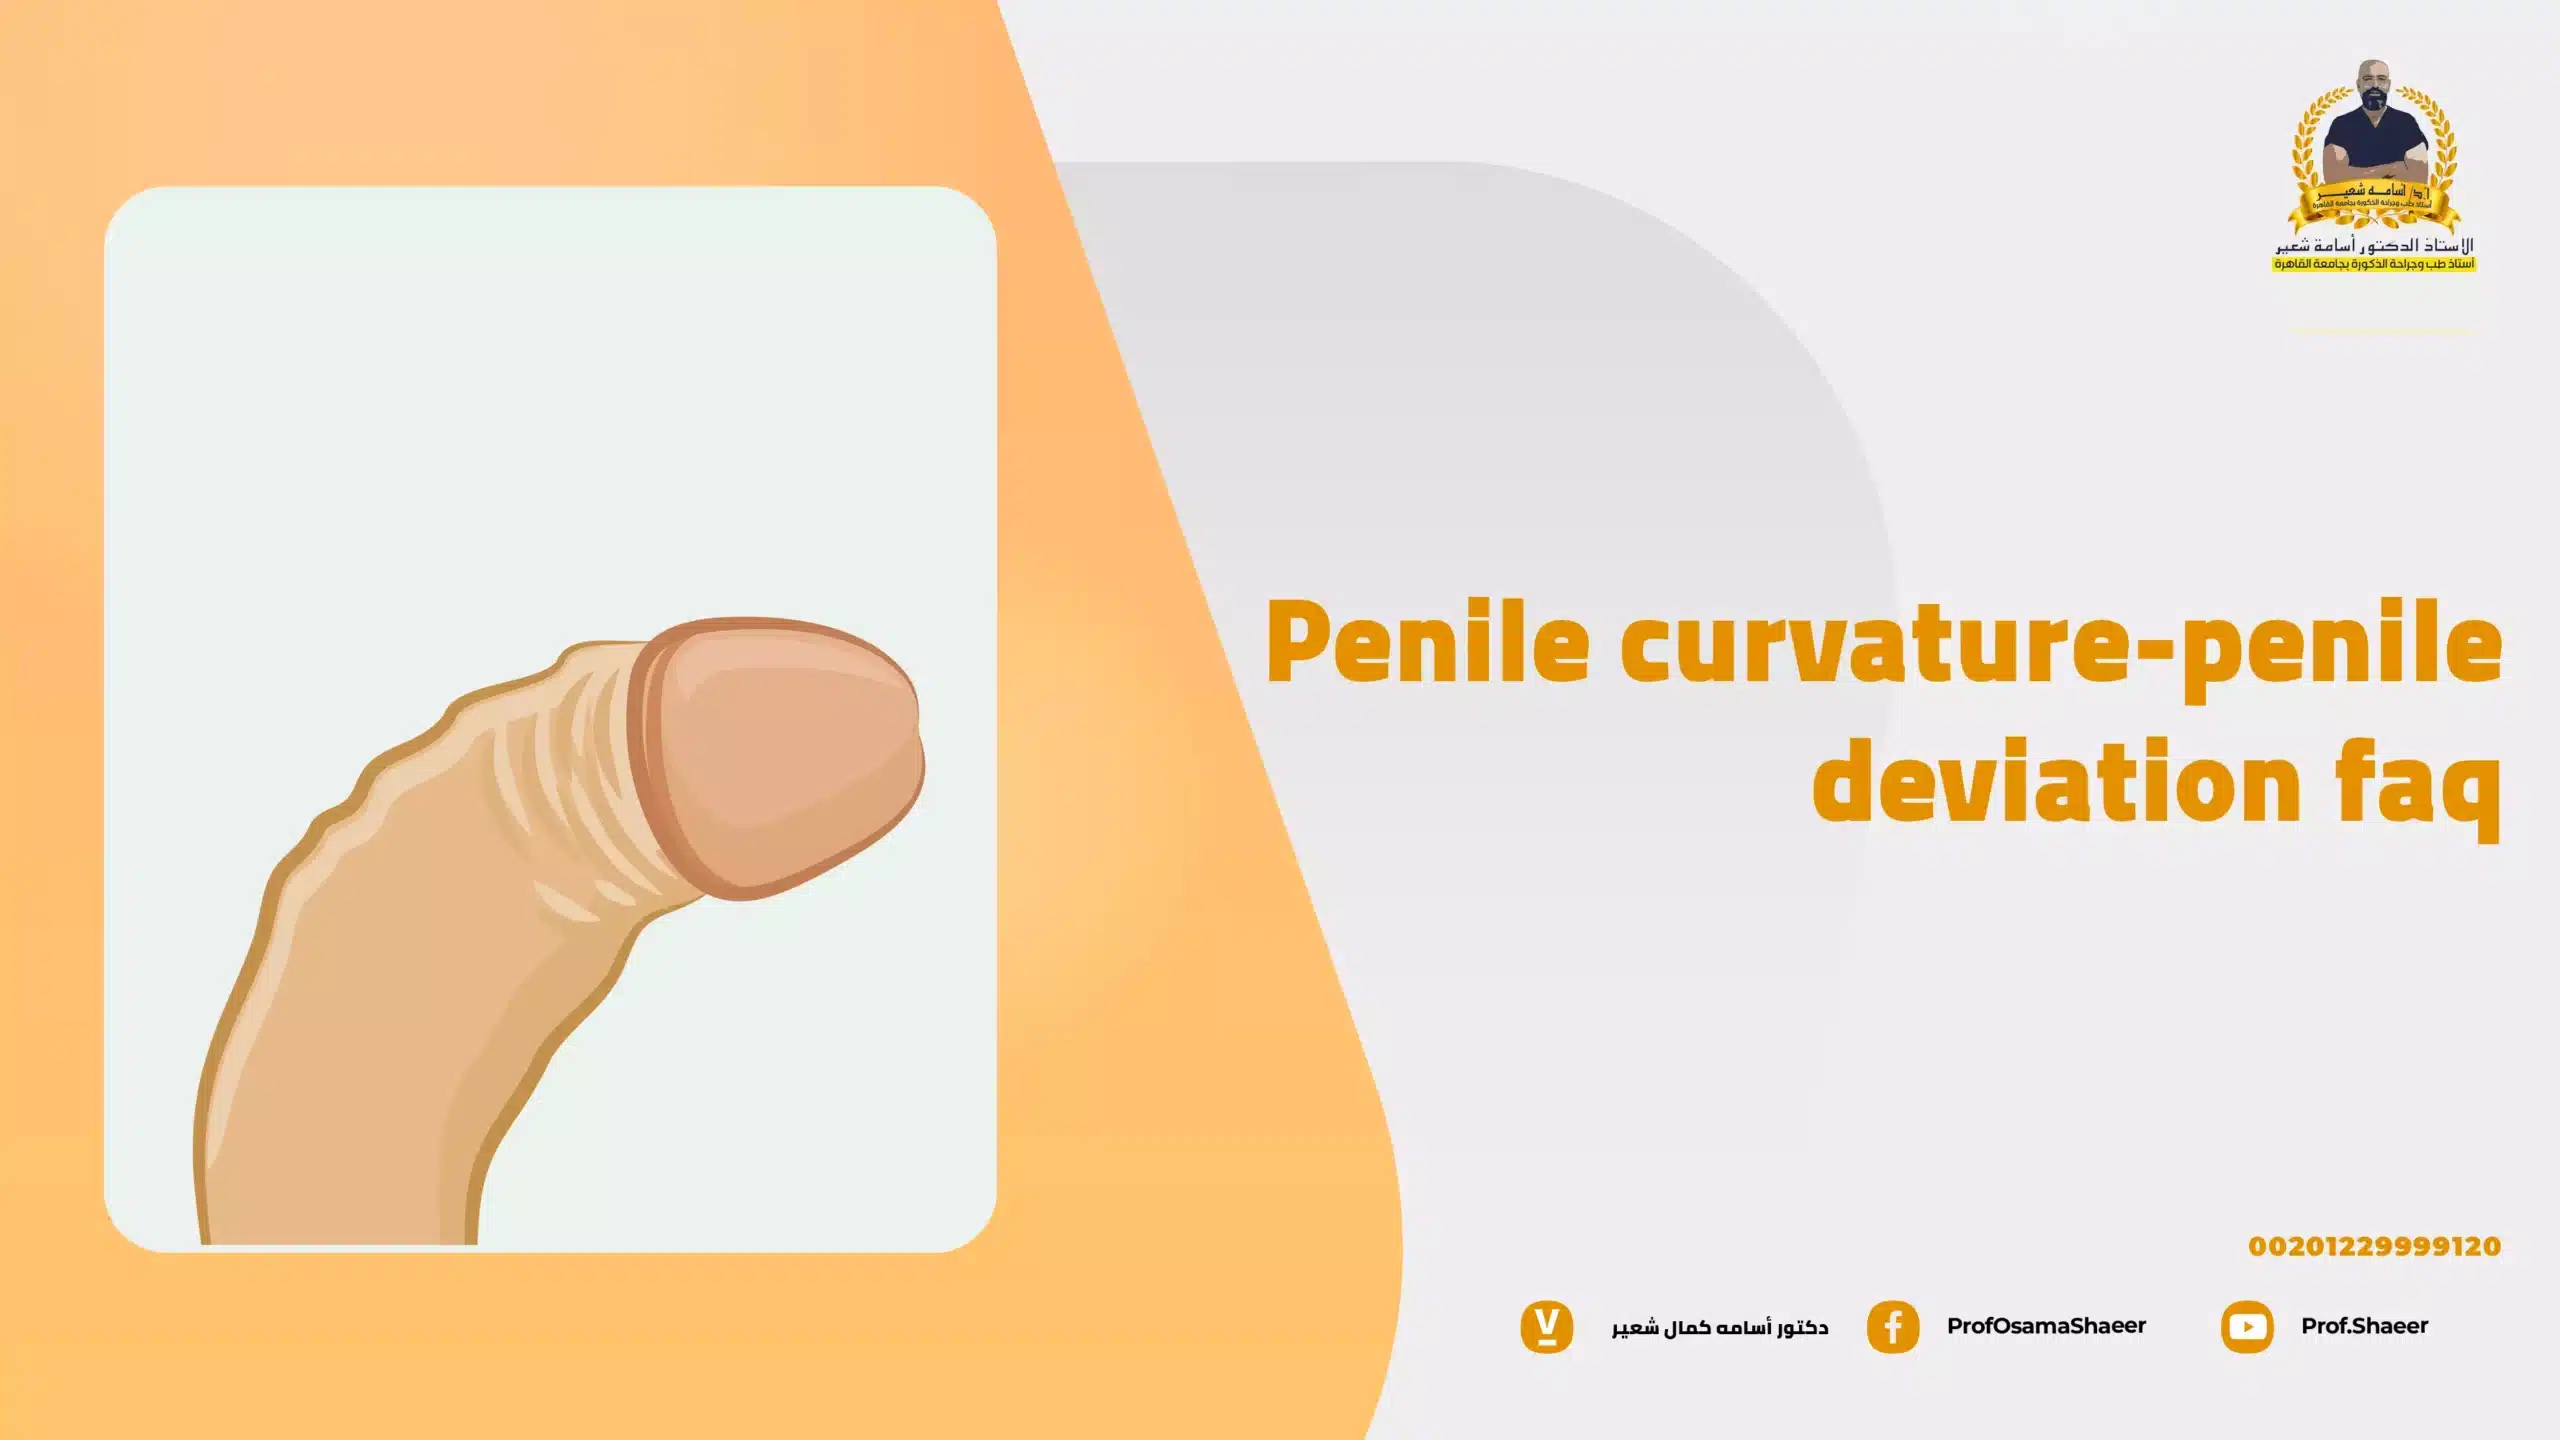 Penile Curvature-Penile Deviation FAQ